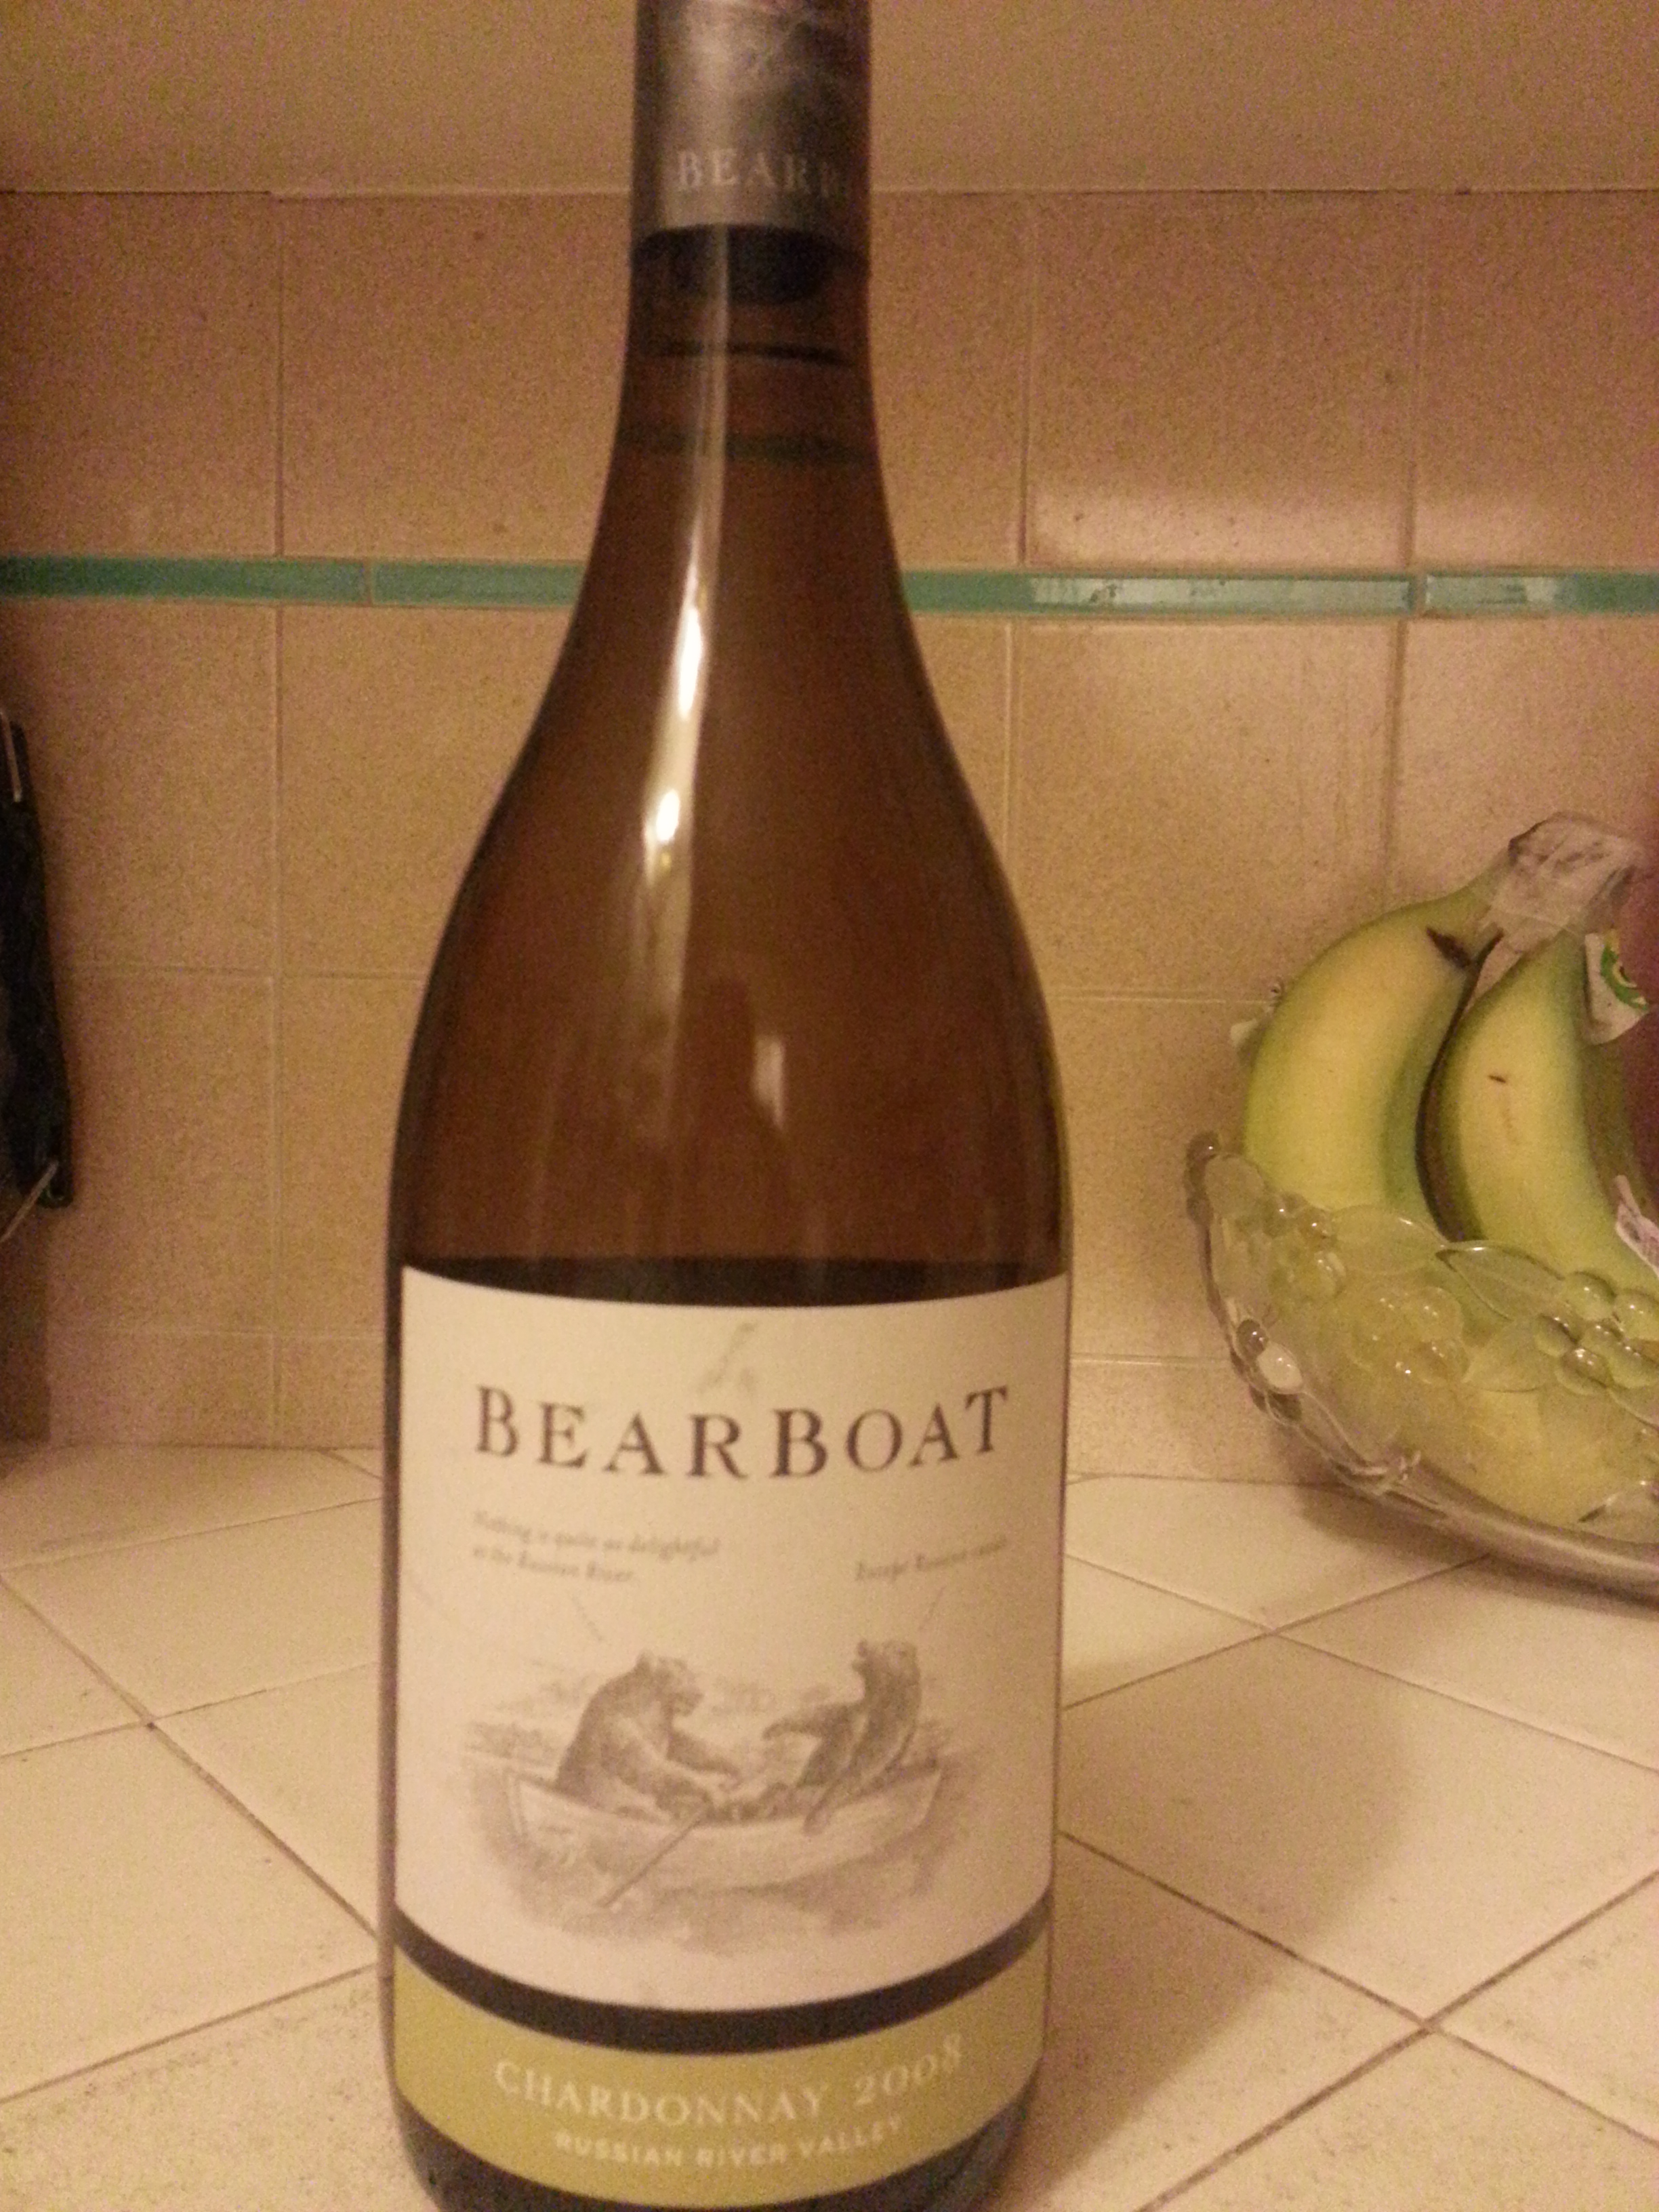 Bearboat wine